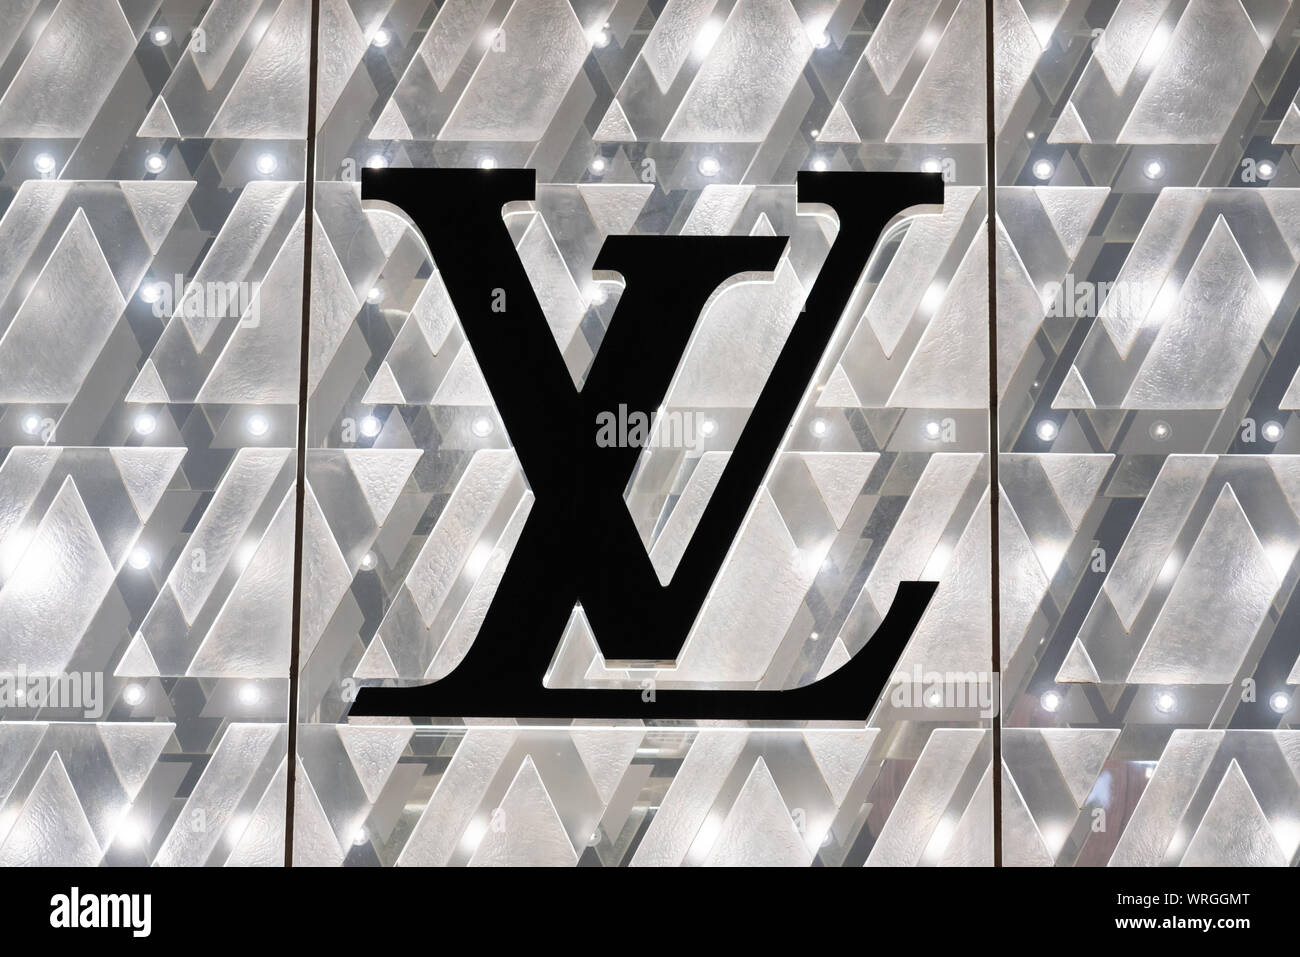 Lv logo Black and White Stock Photos & Images - Alamy